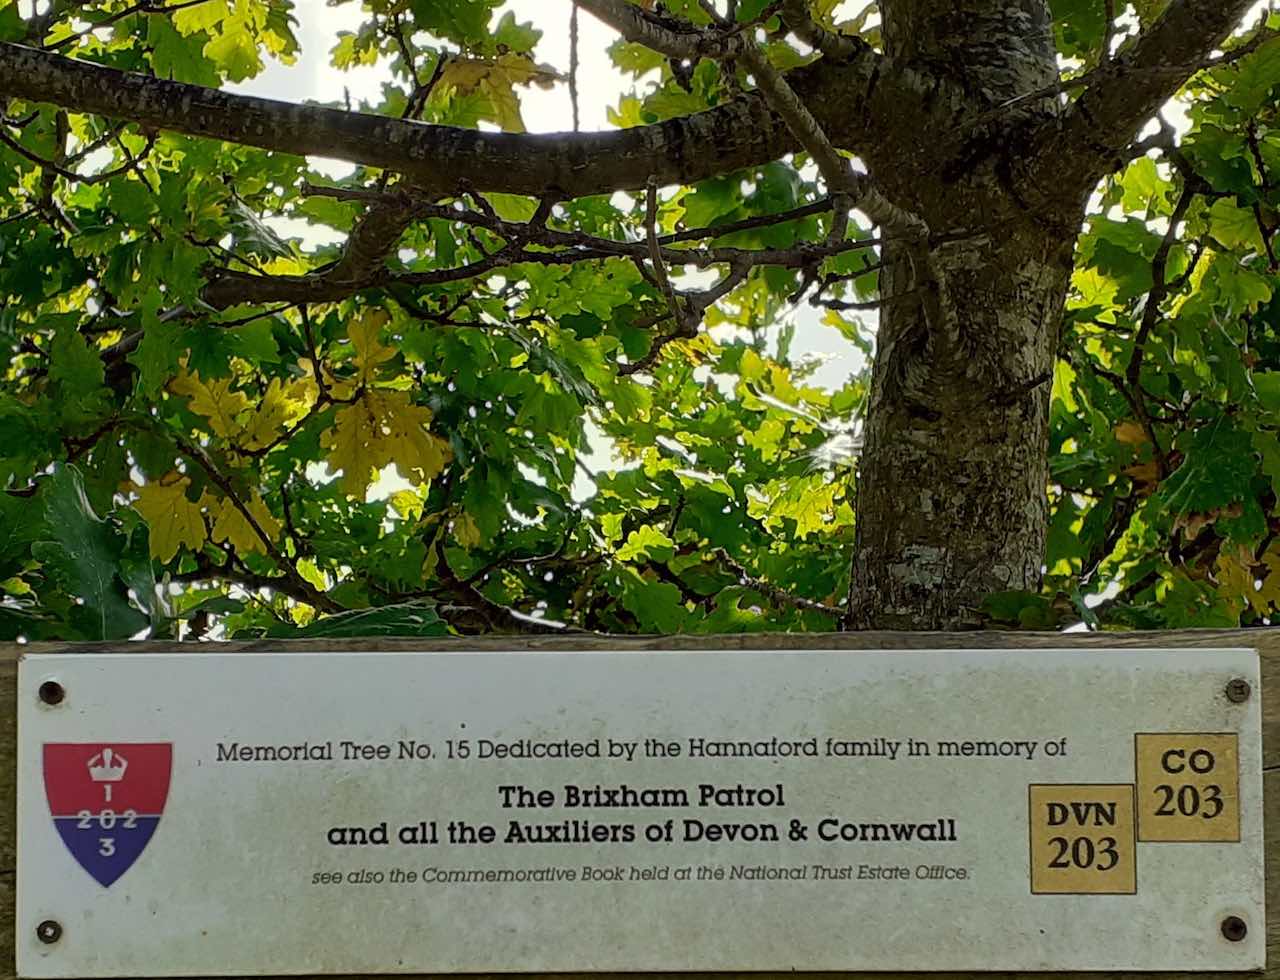 Brixham Patrol Memorial tree at Coleshill Estate Grounds